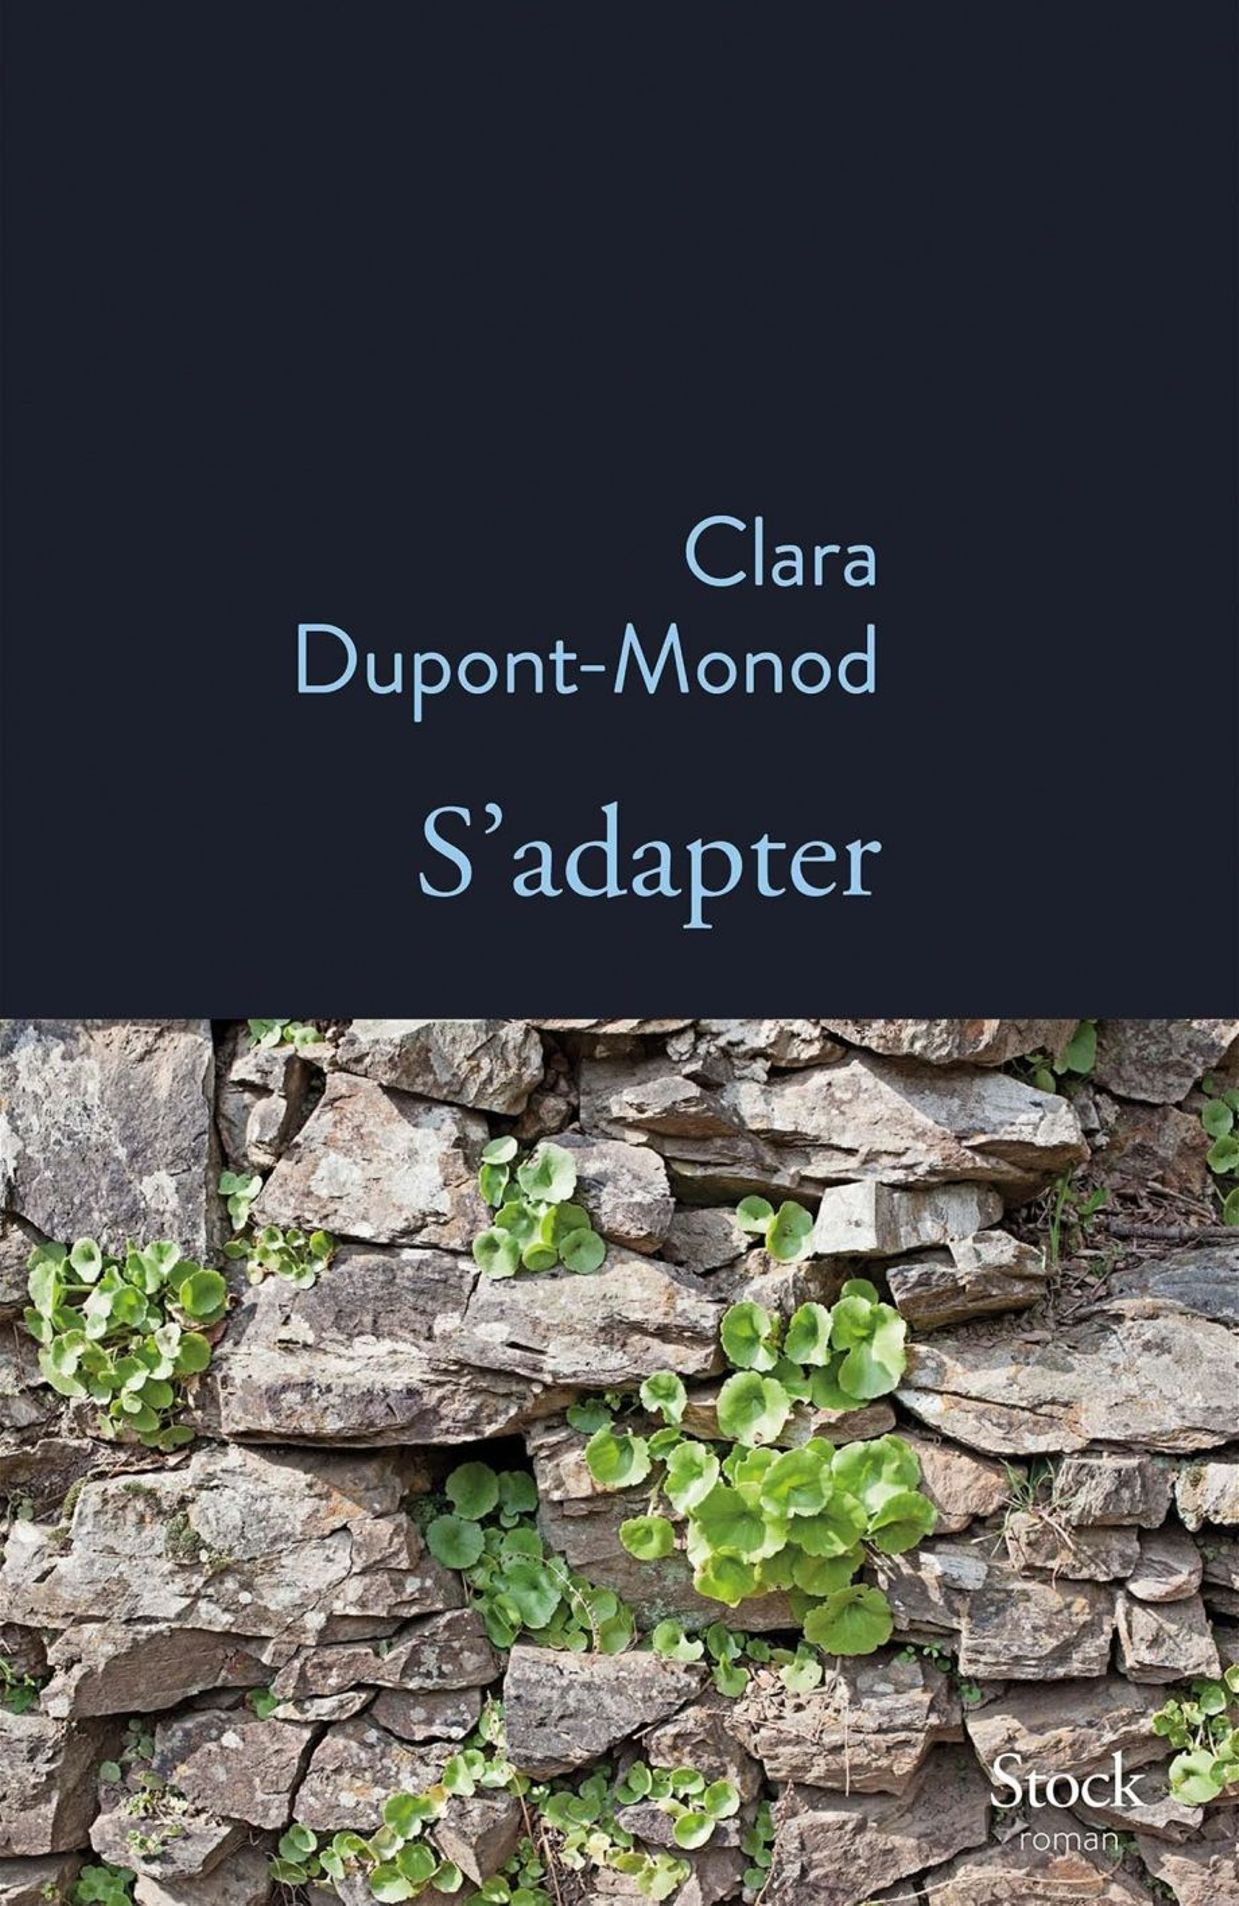 Clara Dupont-Monod, S'adapter - prix Femina 2021